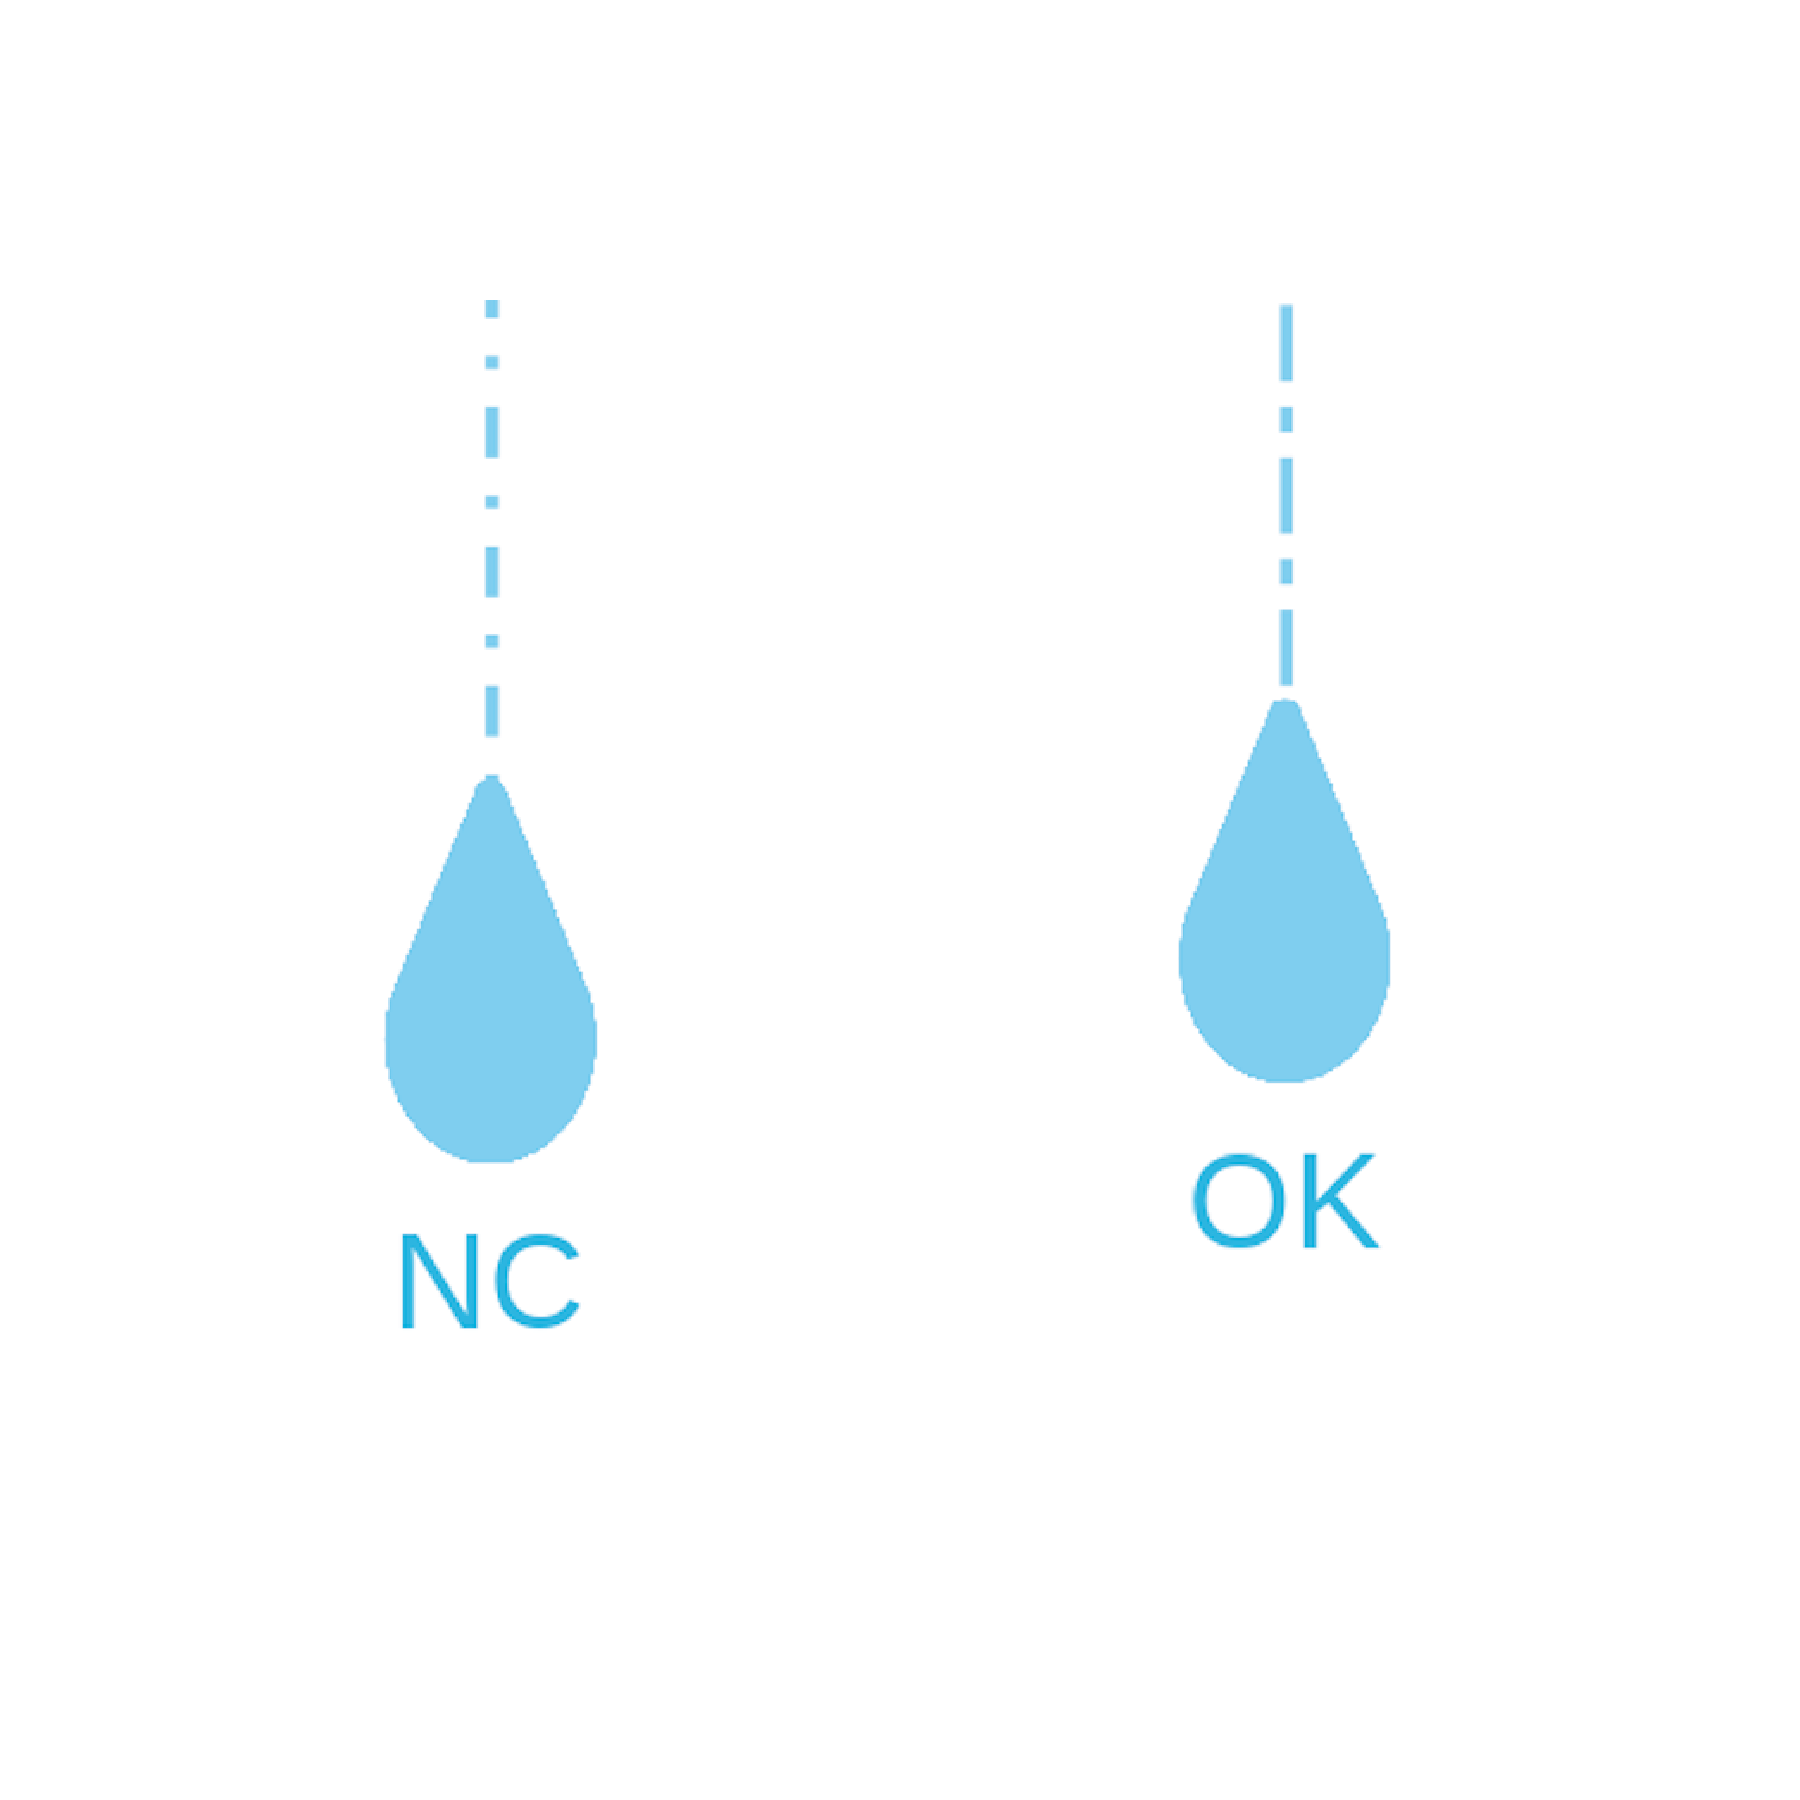 Raindrop images used to display mean rainfall interception using `ggfx` for North Carolina and Oklahoma